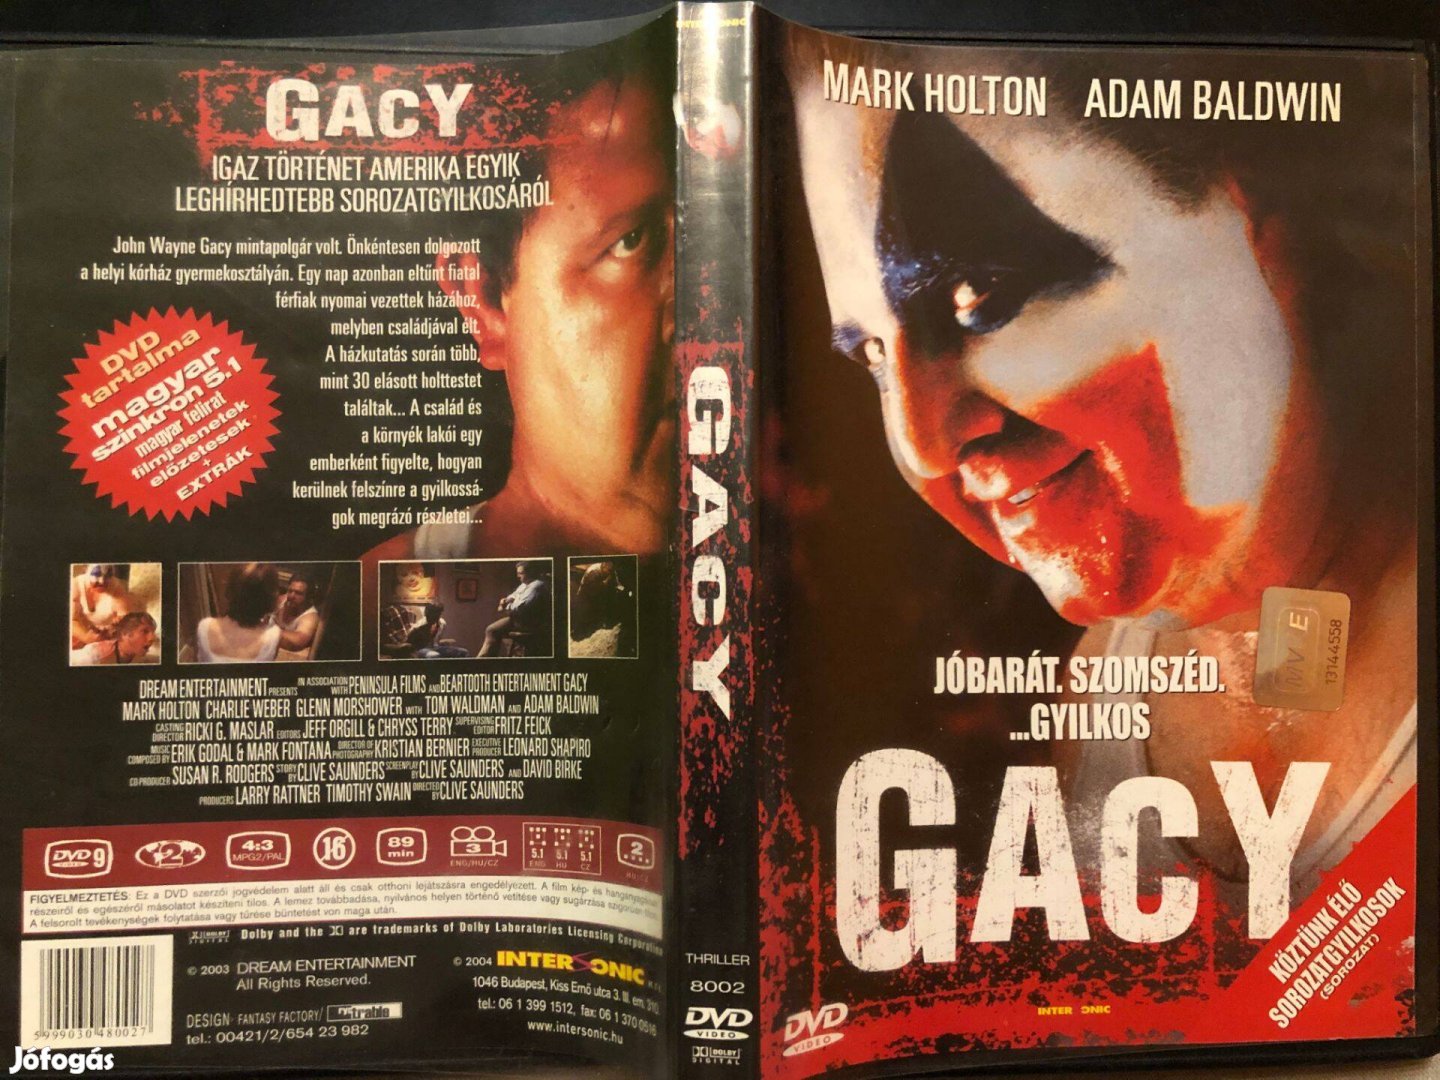 Gacy DVD (karcmentes, Mark Holton, Adam Baldwin)